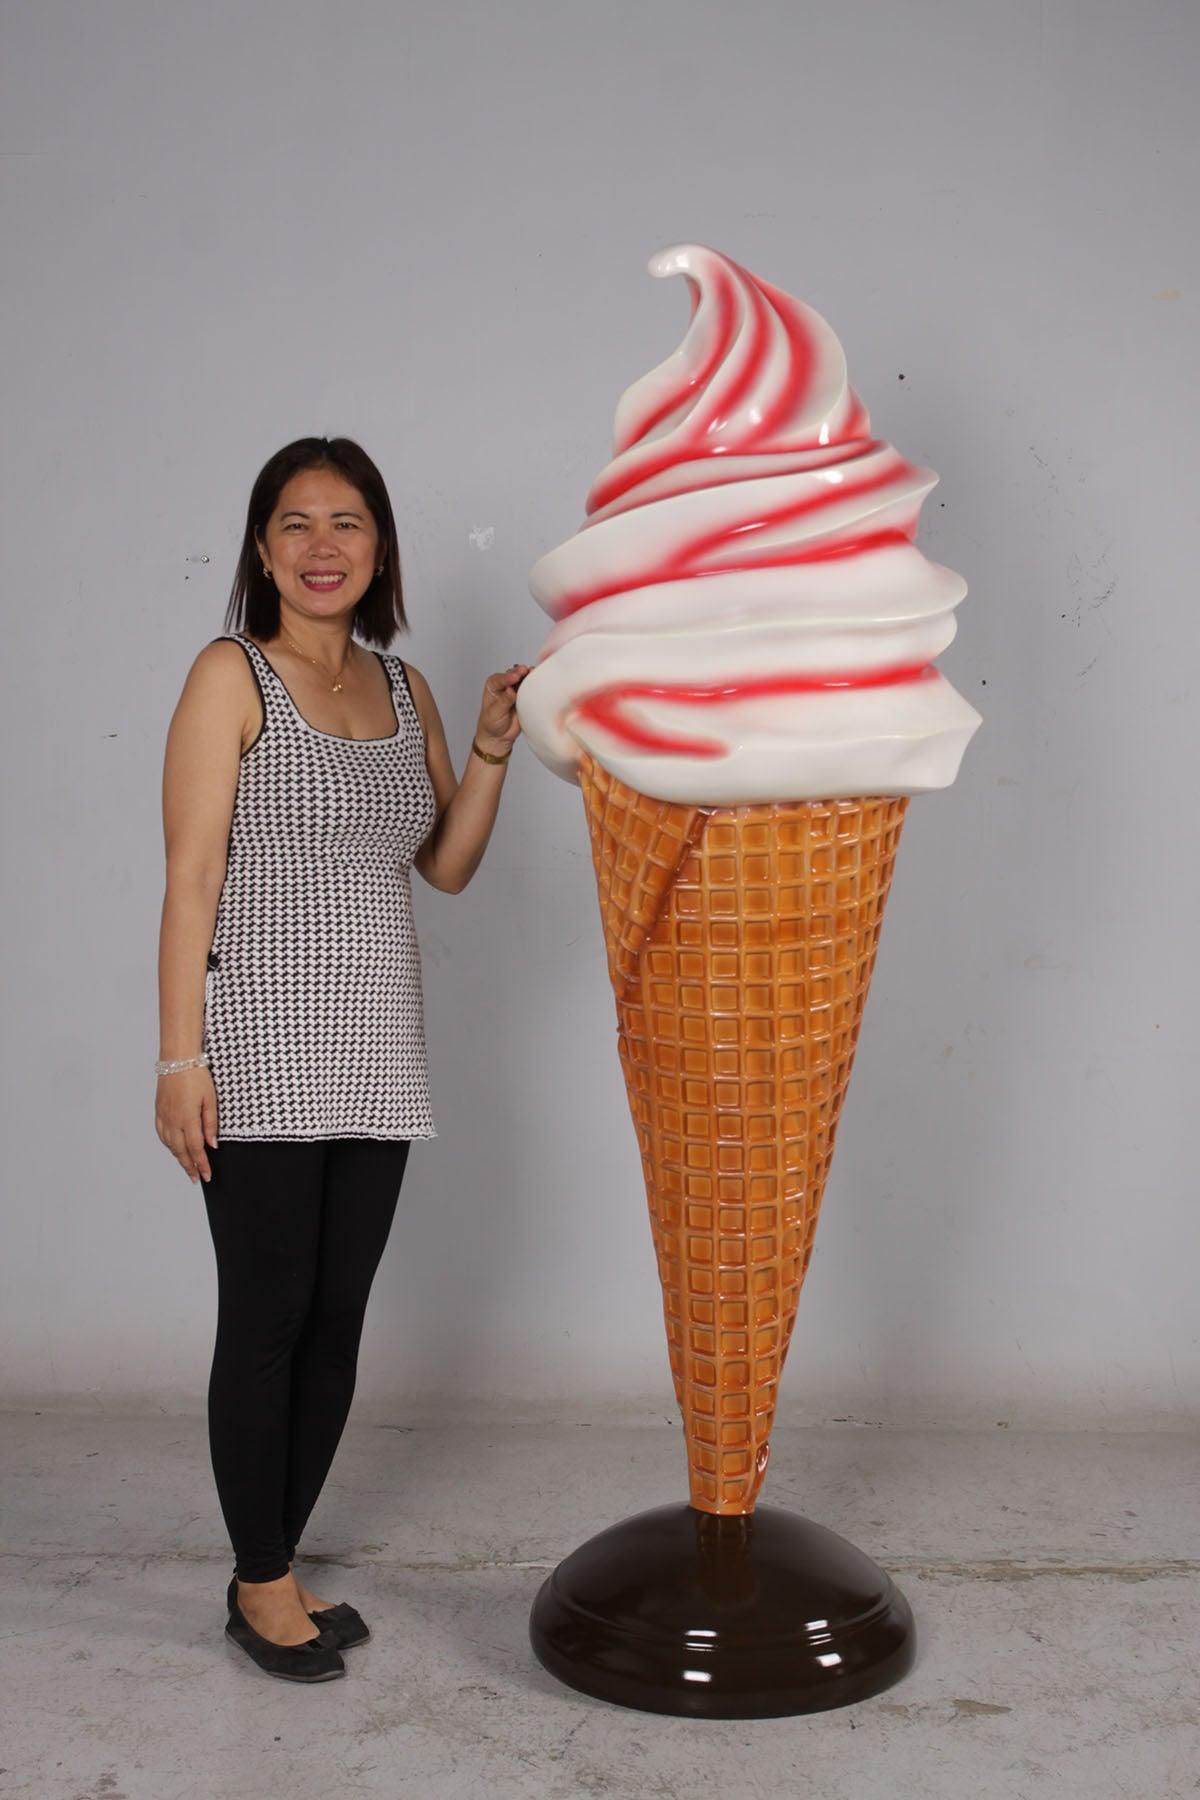 Large Plain Strawberry Soft Serve Ice Cream Statue - LM Treasures Prop Rentals 